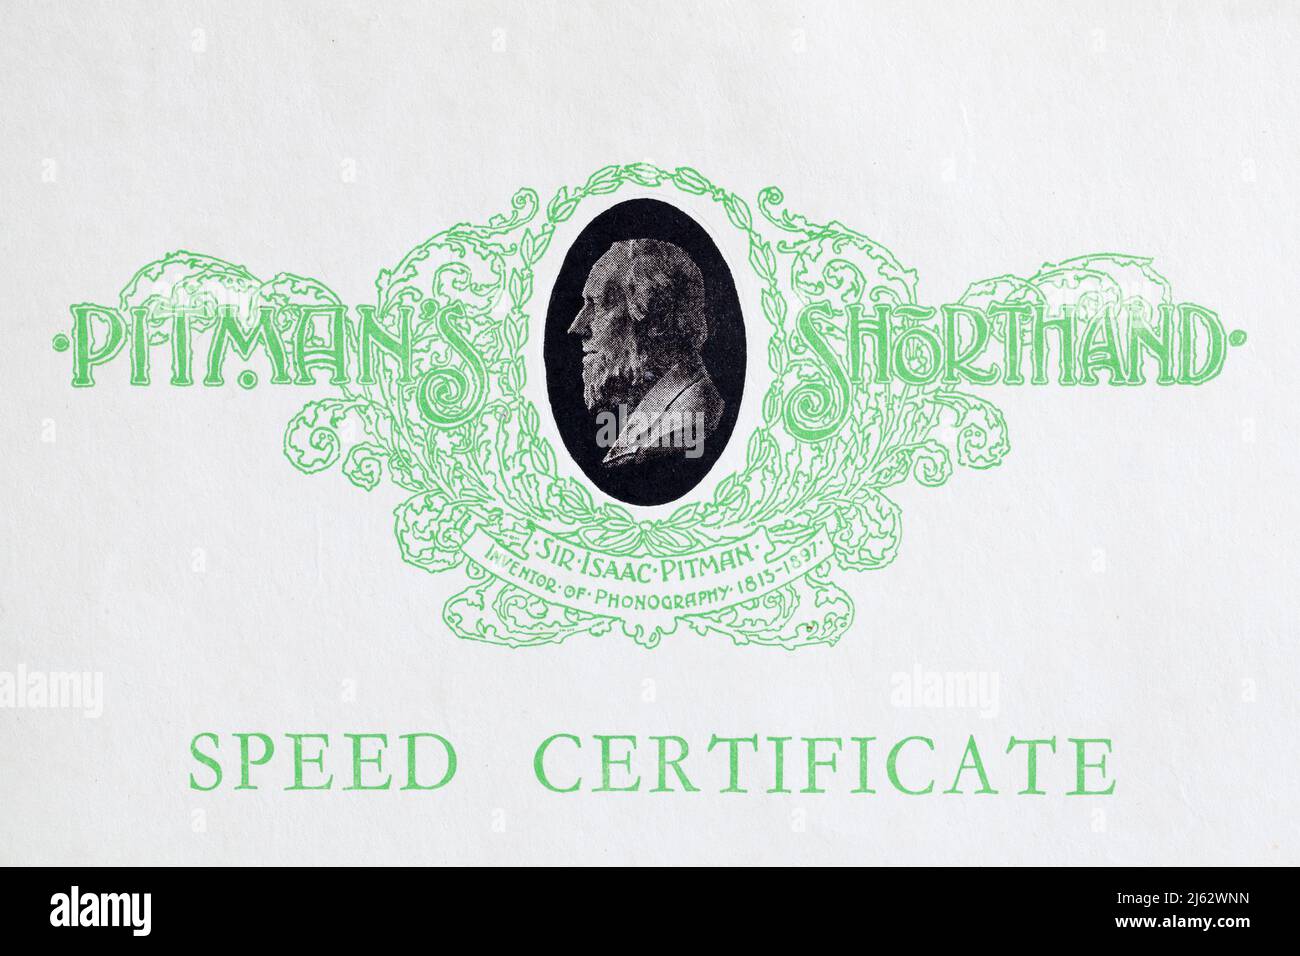 Pitmans Shorthand Certificate Stock Photo